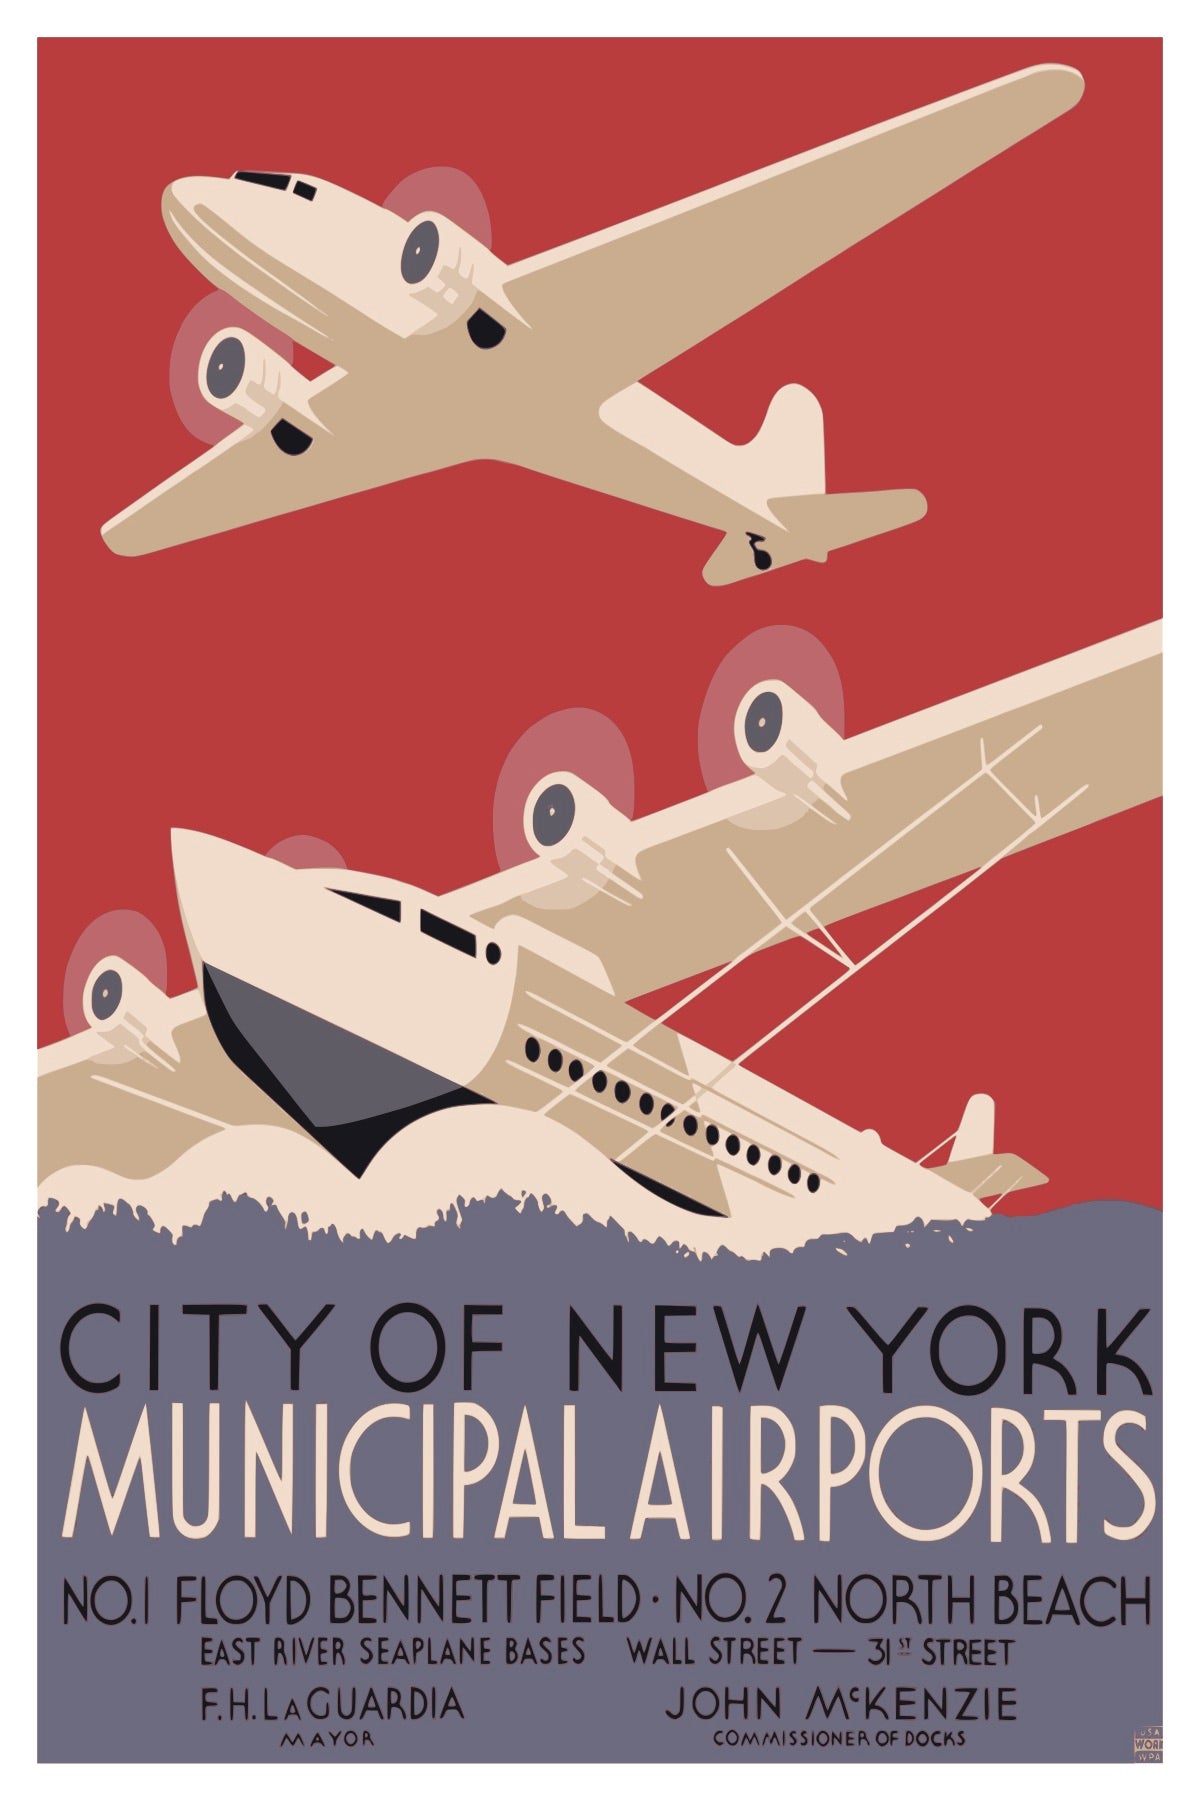 POSTKARTE DER STADT NEW YORK MUNICIPAL AIRPORTS